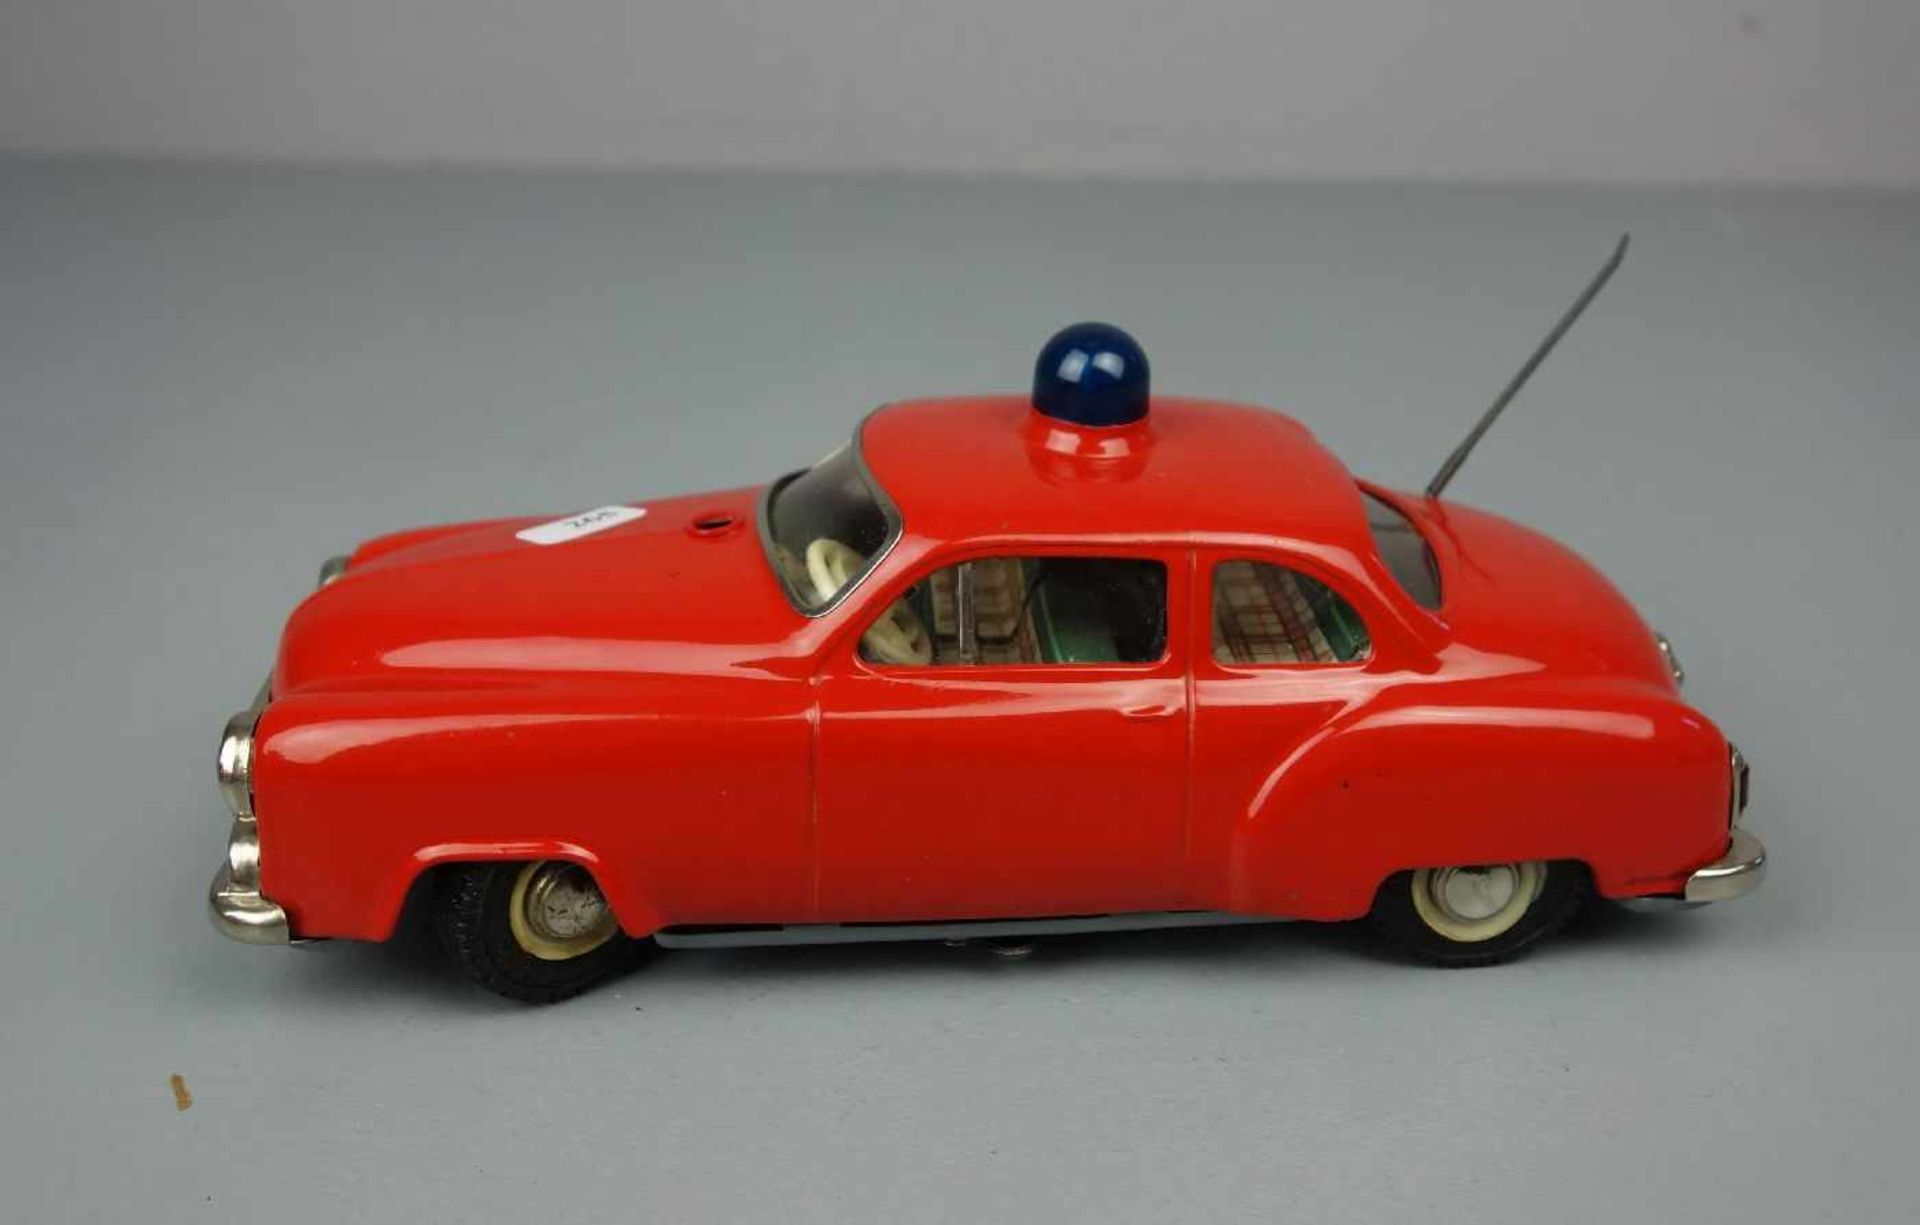 BLECHSPIELZEUG / FAHRZEUG: Polizeiauto / Alarm-Car 5340 / tin toy police car, Manufaktur Schuco - - Bild 2 aus 7